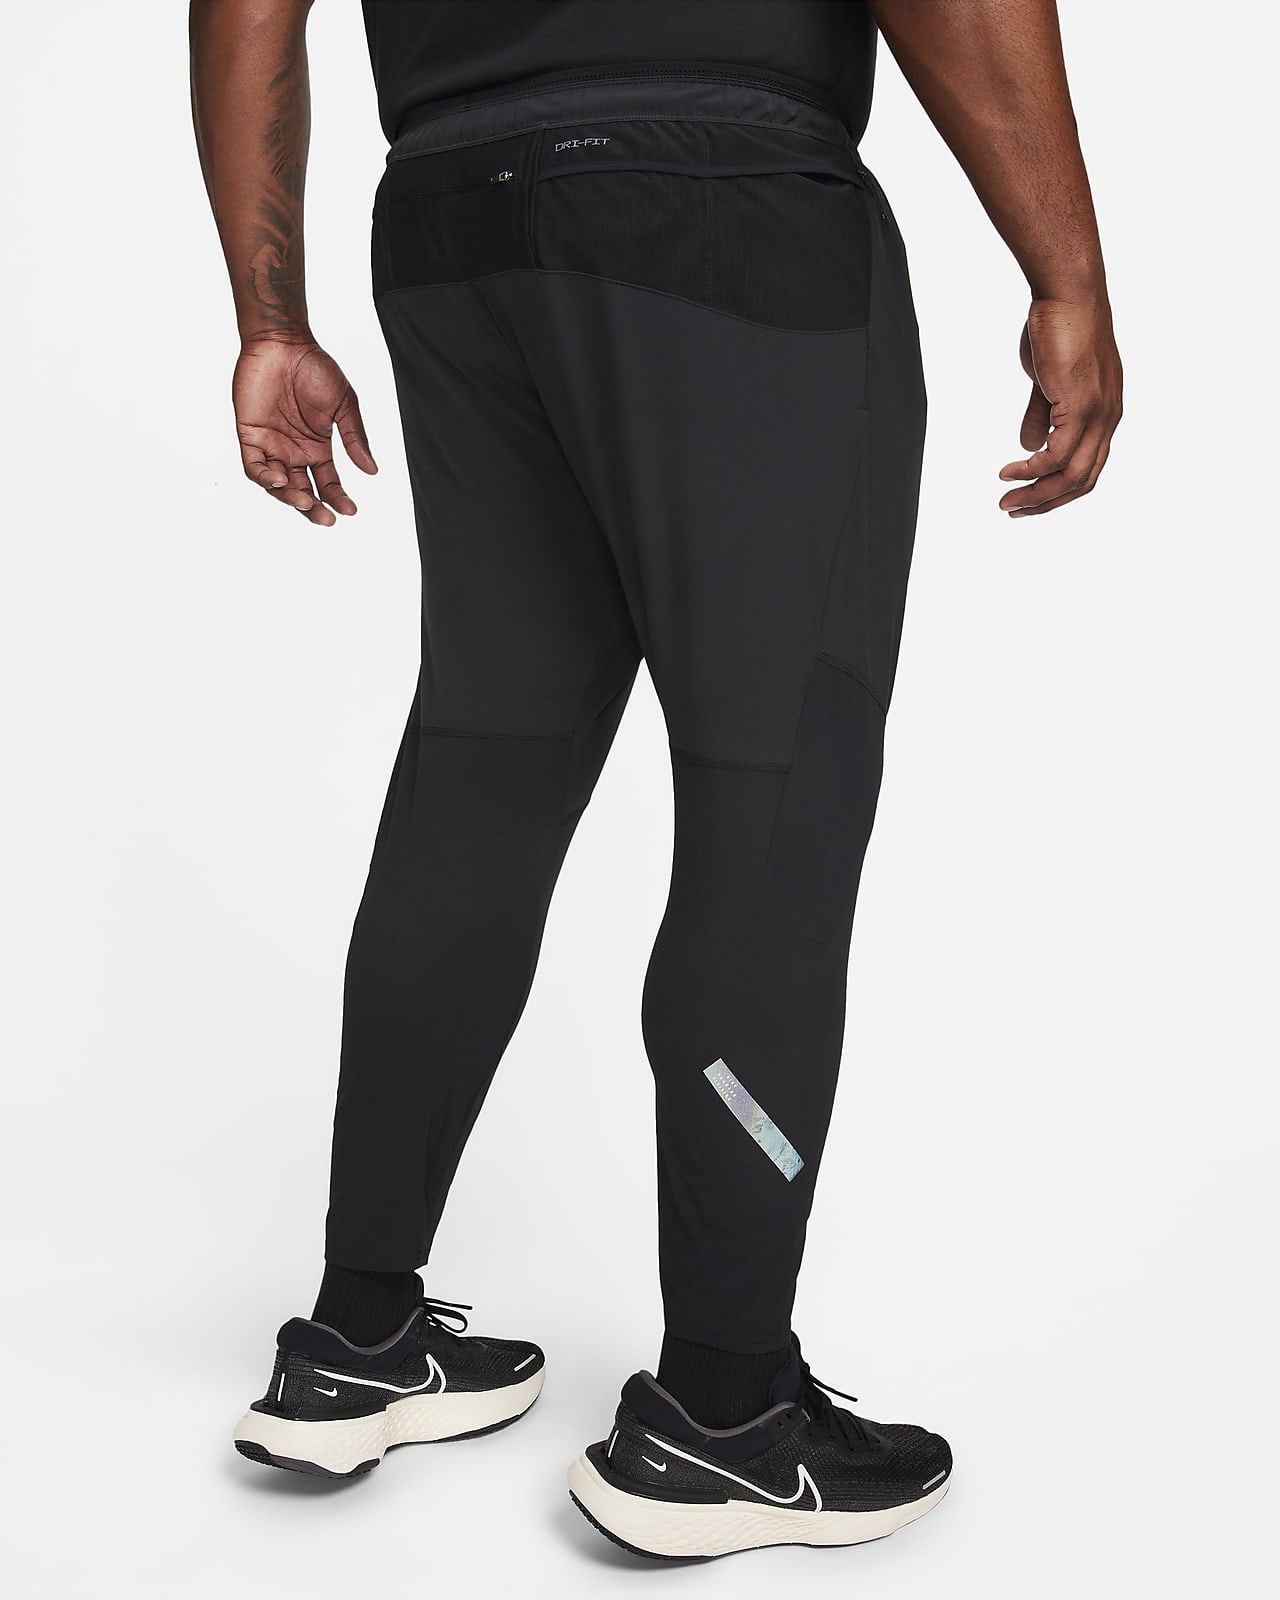 Nike Men's Training Pants 932253 Dri-Fit Therma Fleece-Lined Athletic  Sweatpants | eBay